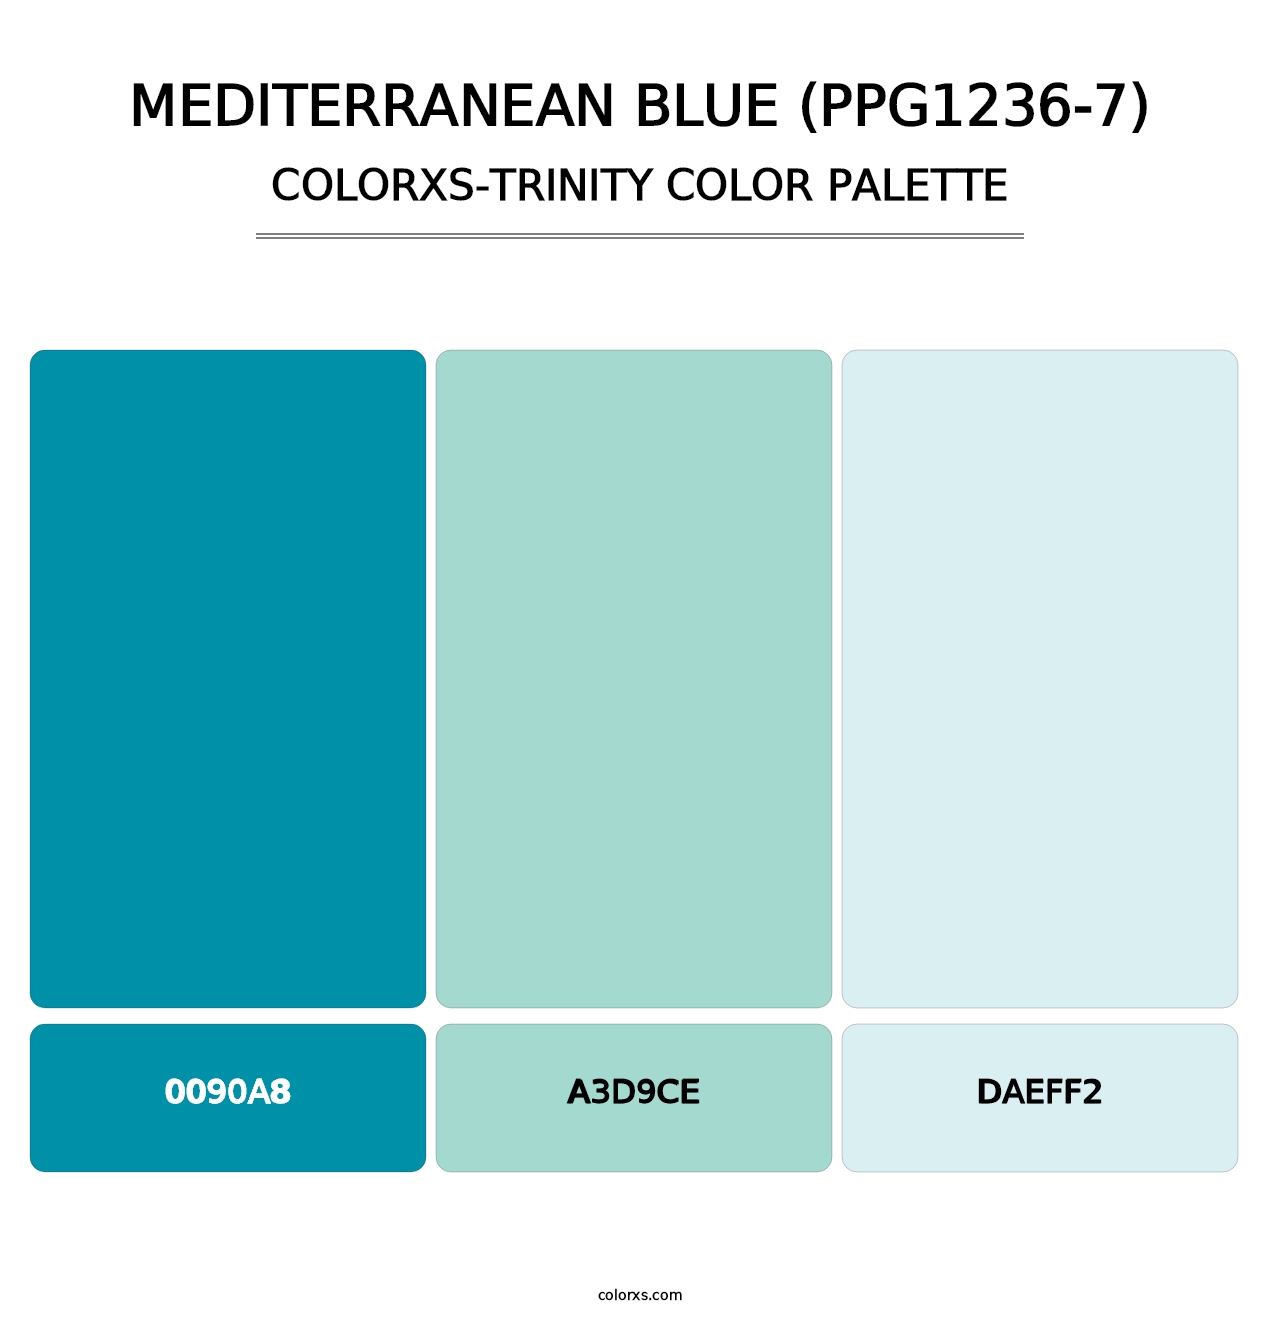 Mediterranean Blue (PPG1236-7) - Colorxs Trinity Palette